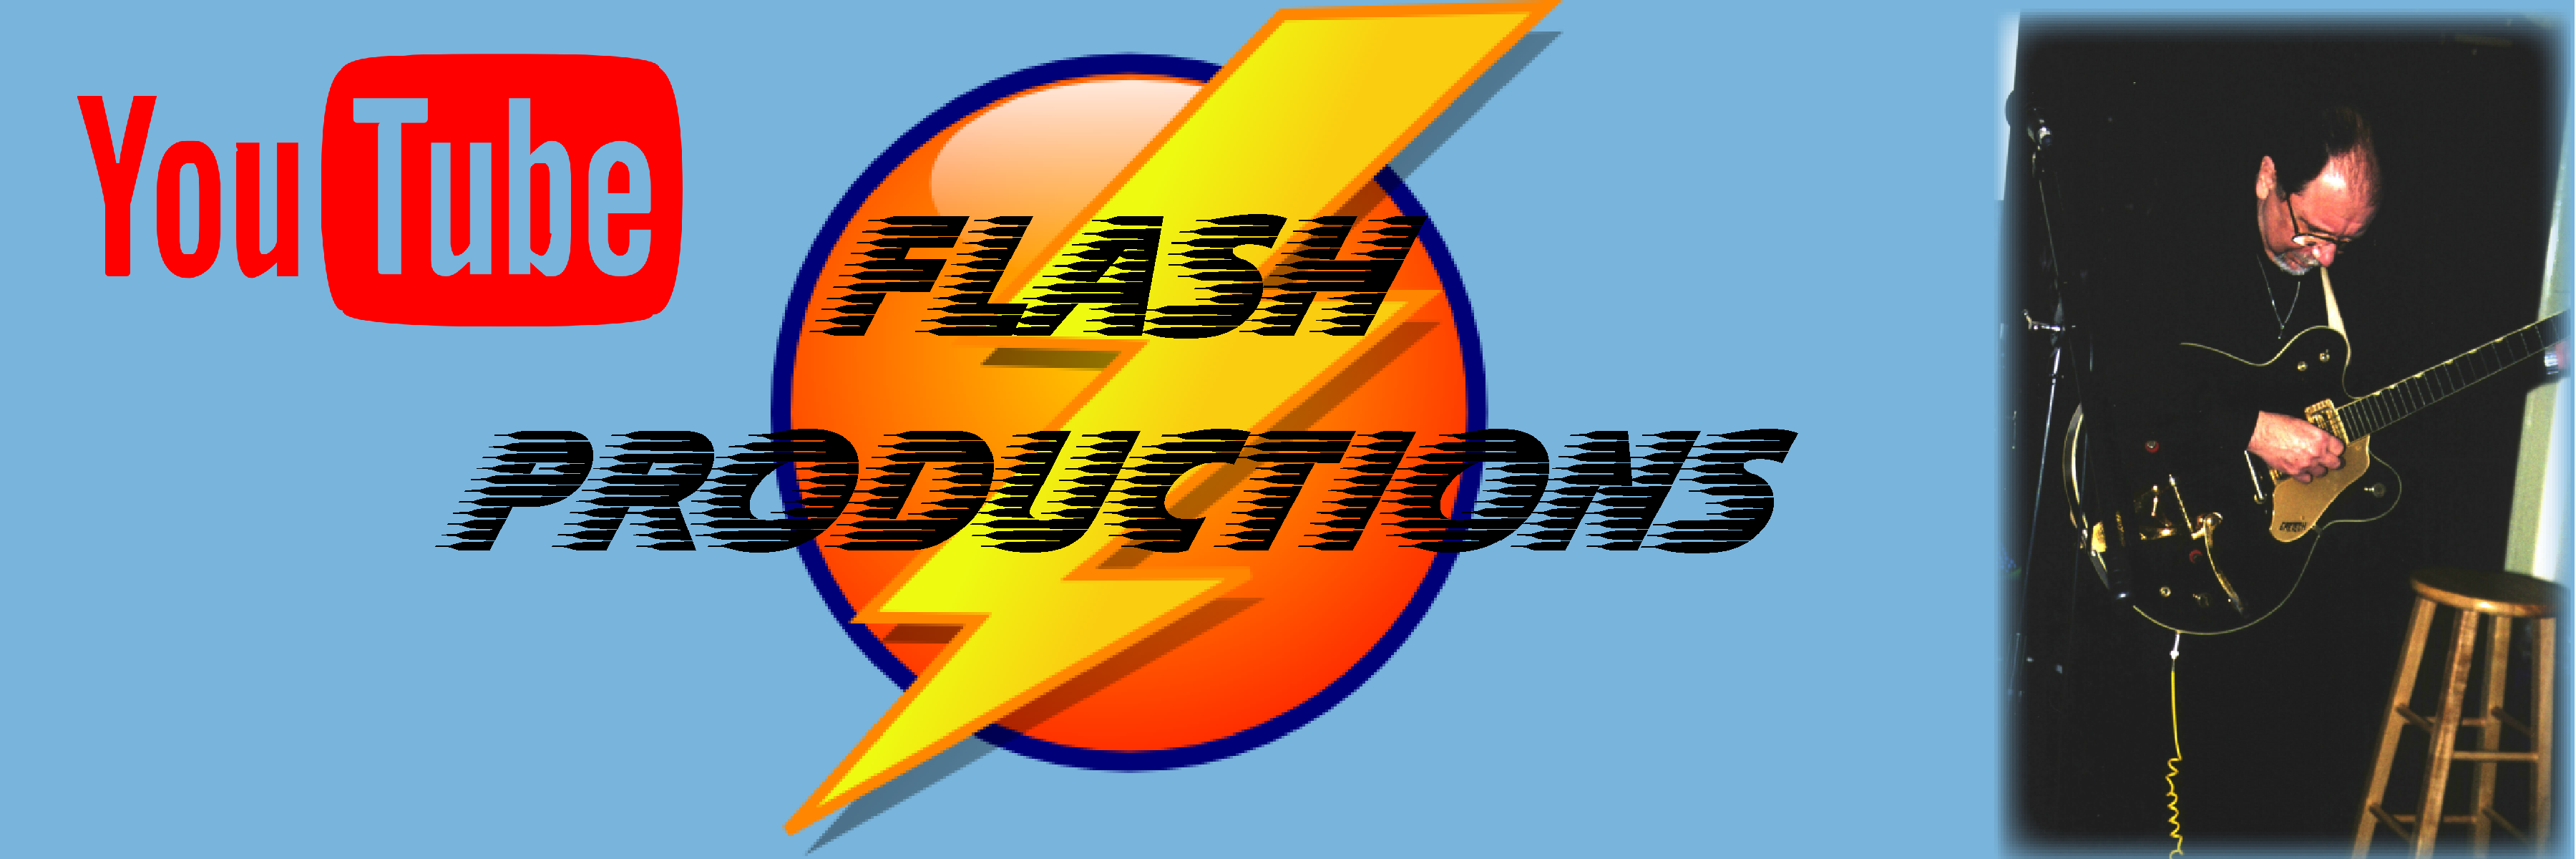 Flash Productions Tou Tube